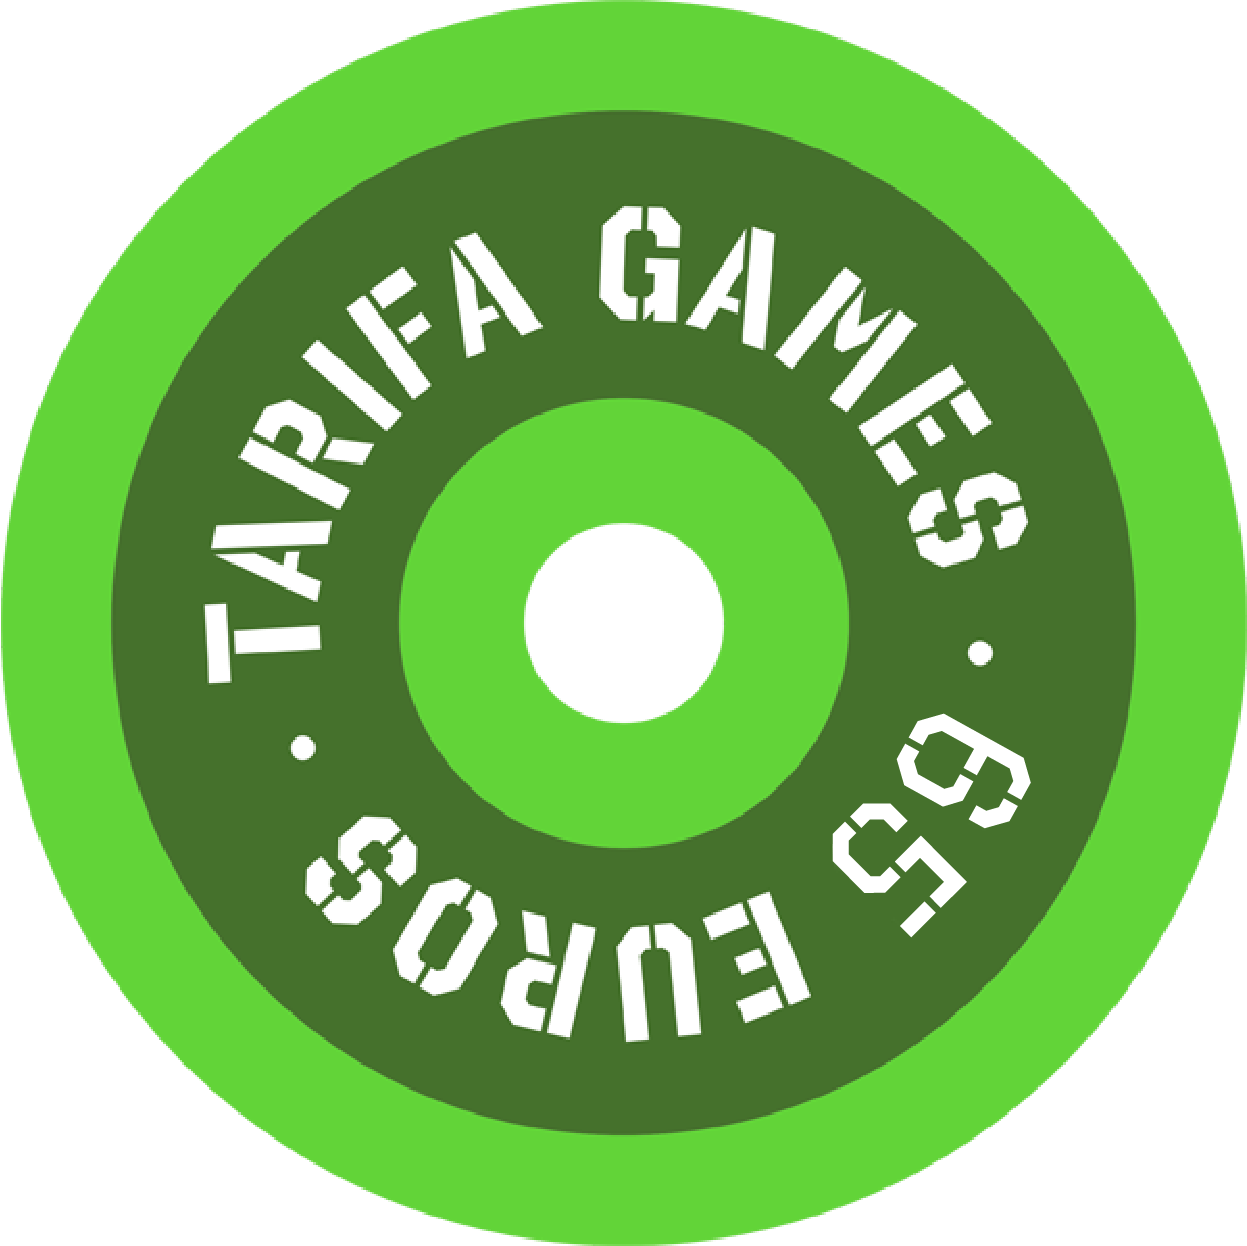 Tarifa Games